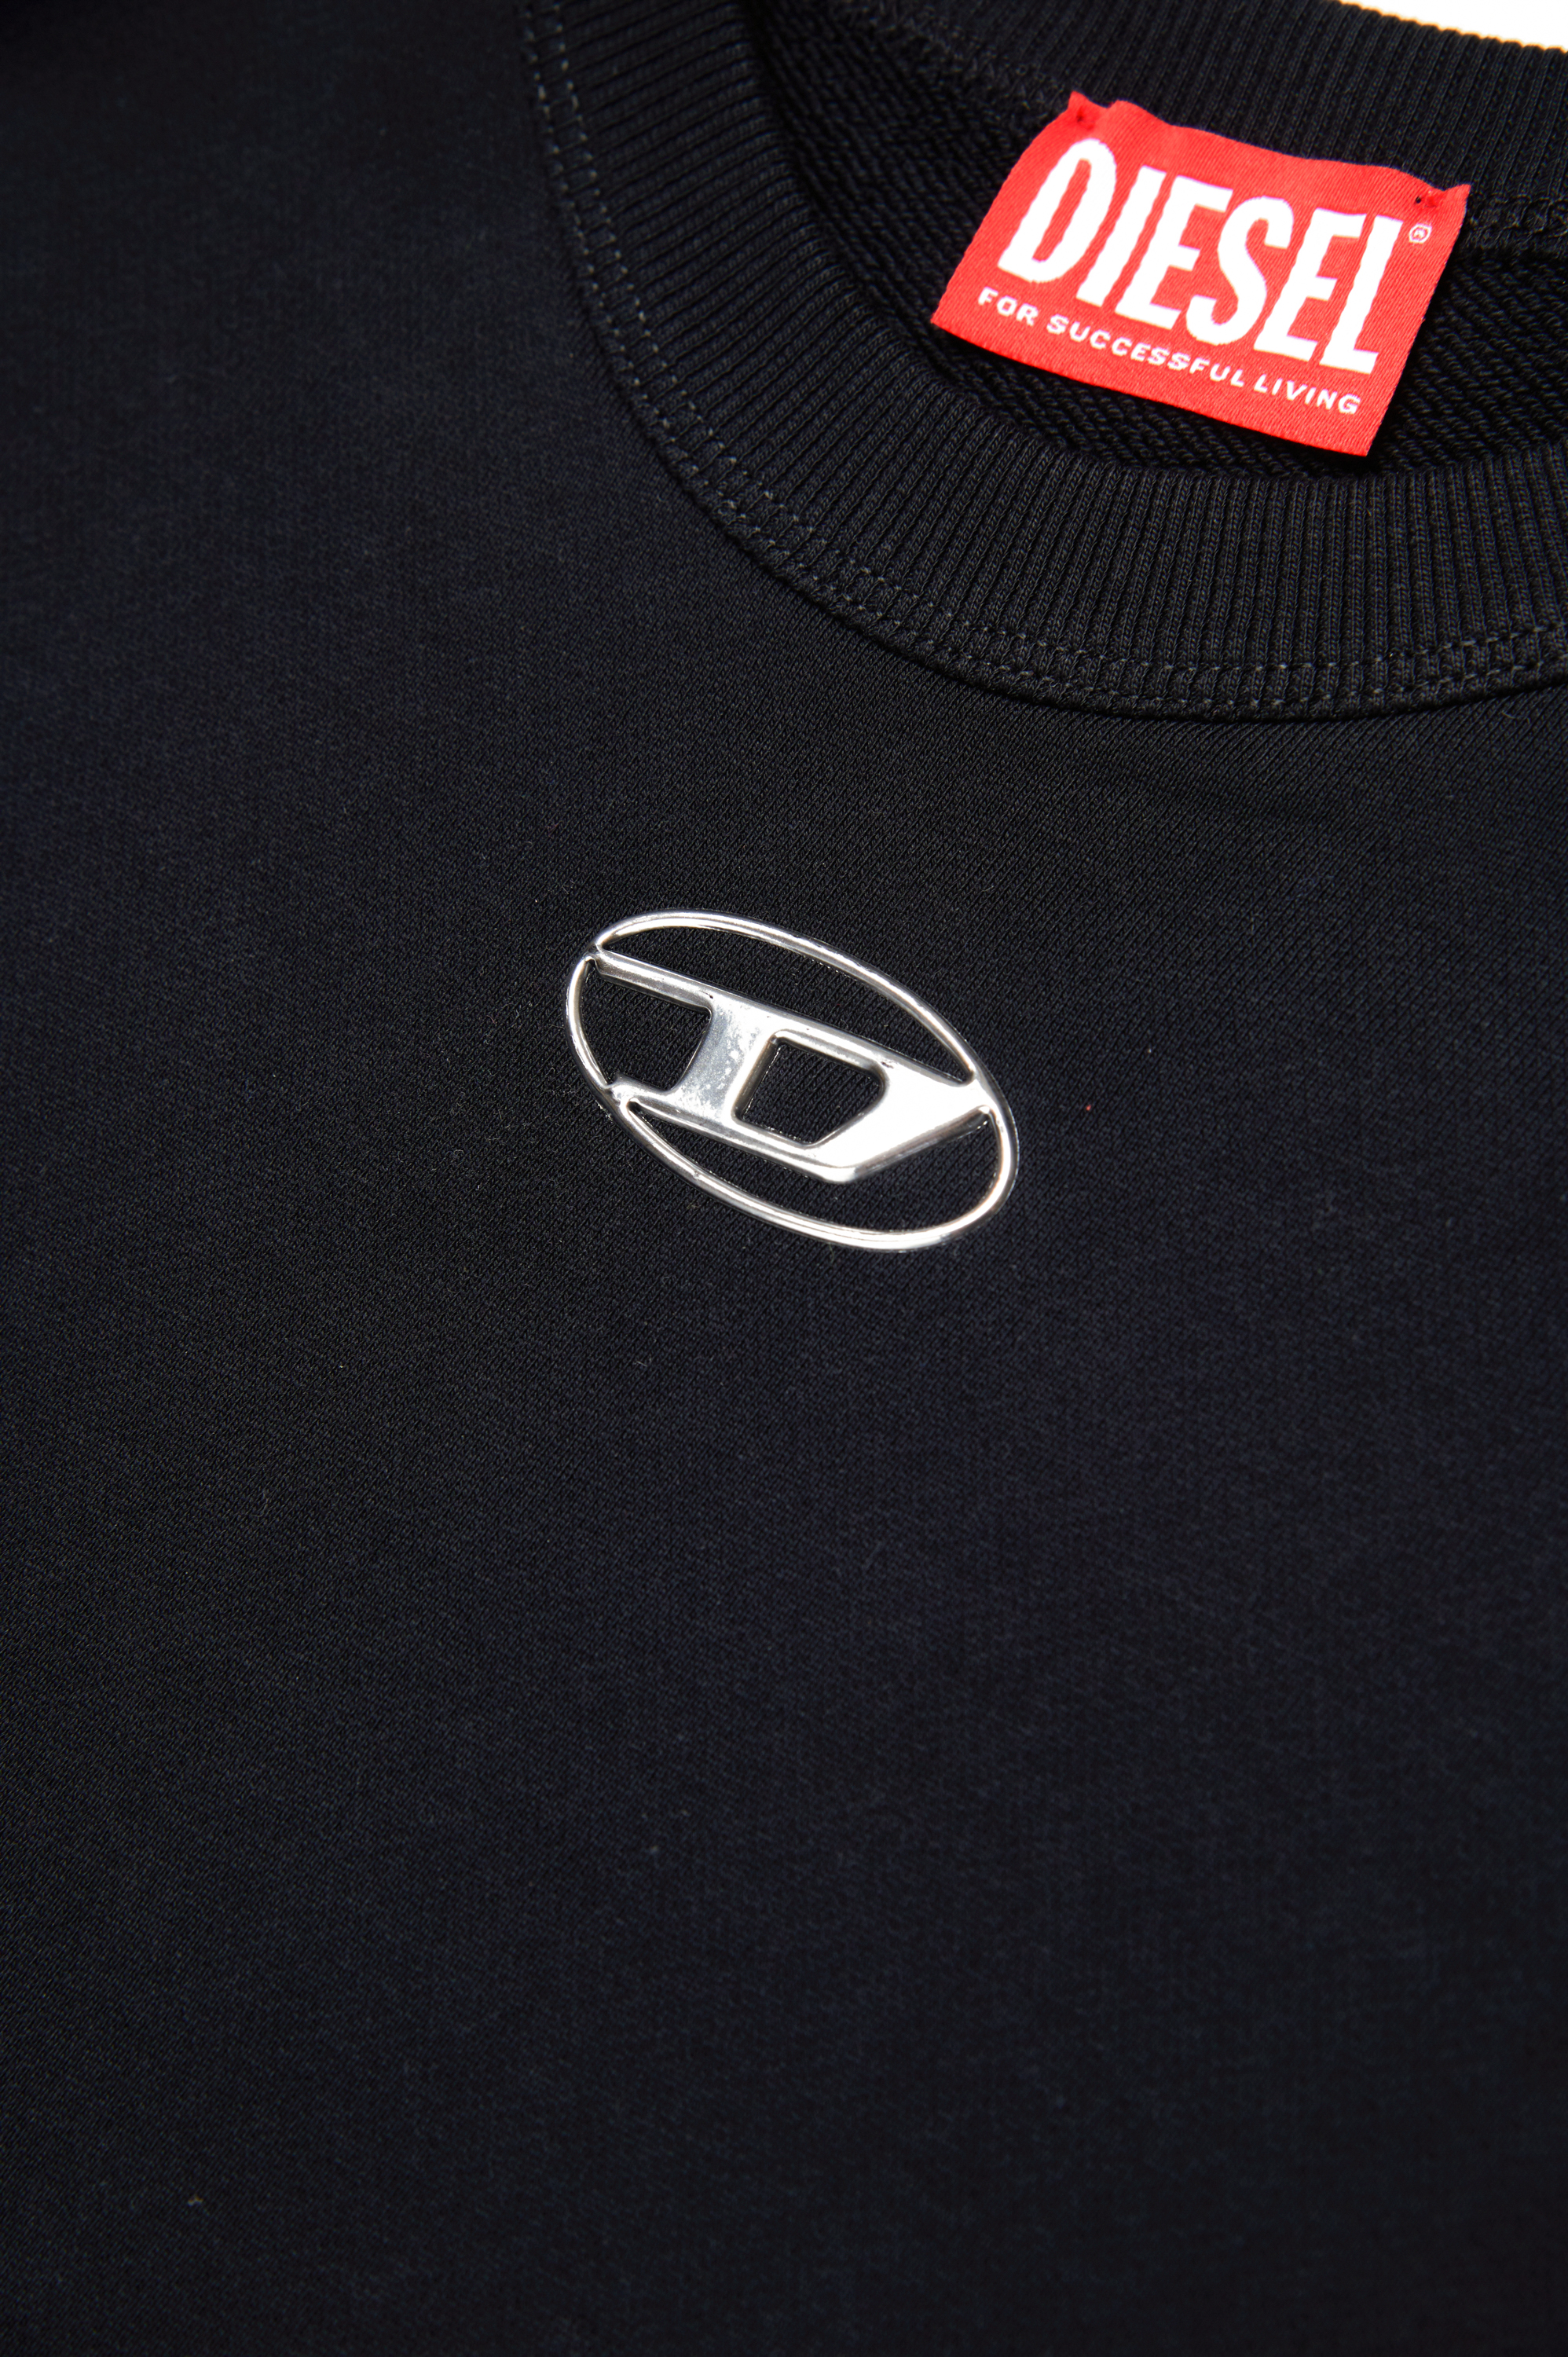 Diesel - SMACSISOD OVER, Homme Sweat-shirt avec logo Oval D effet métal in Noir - Image 4